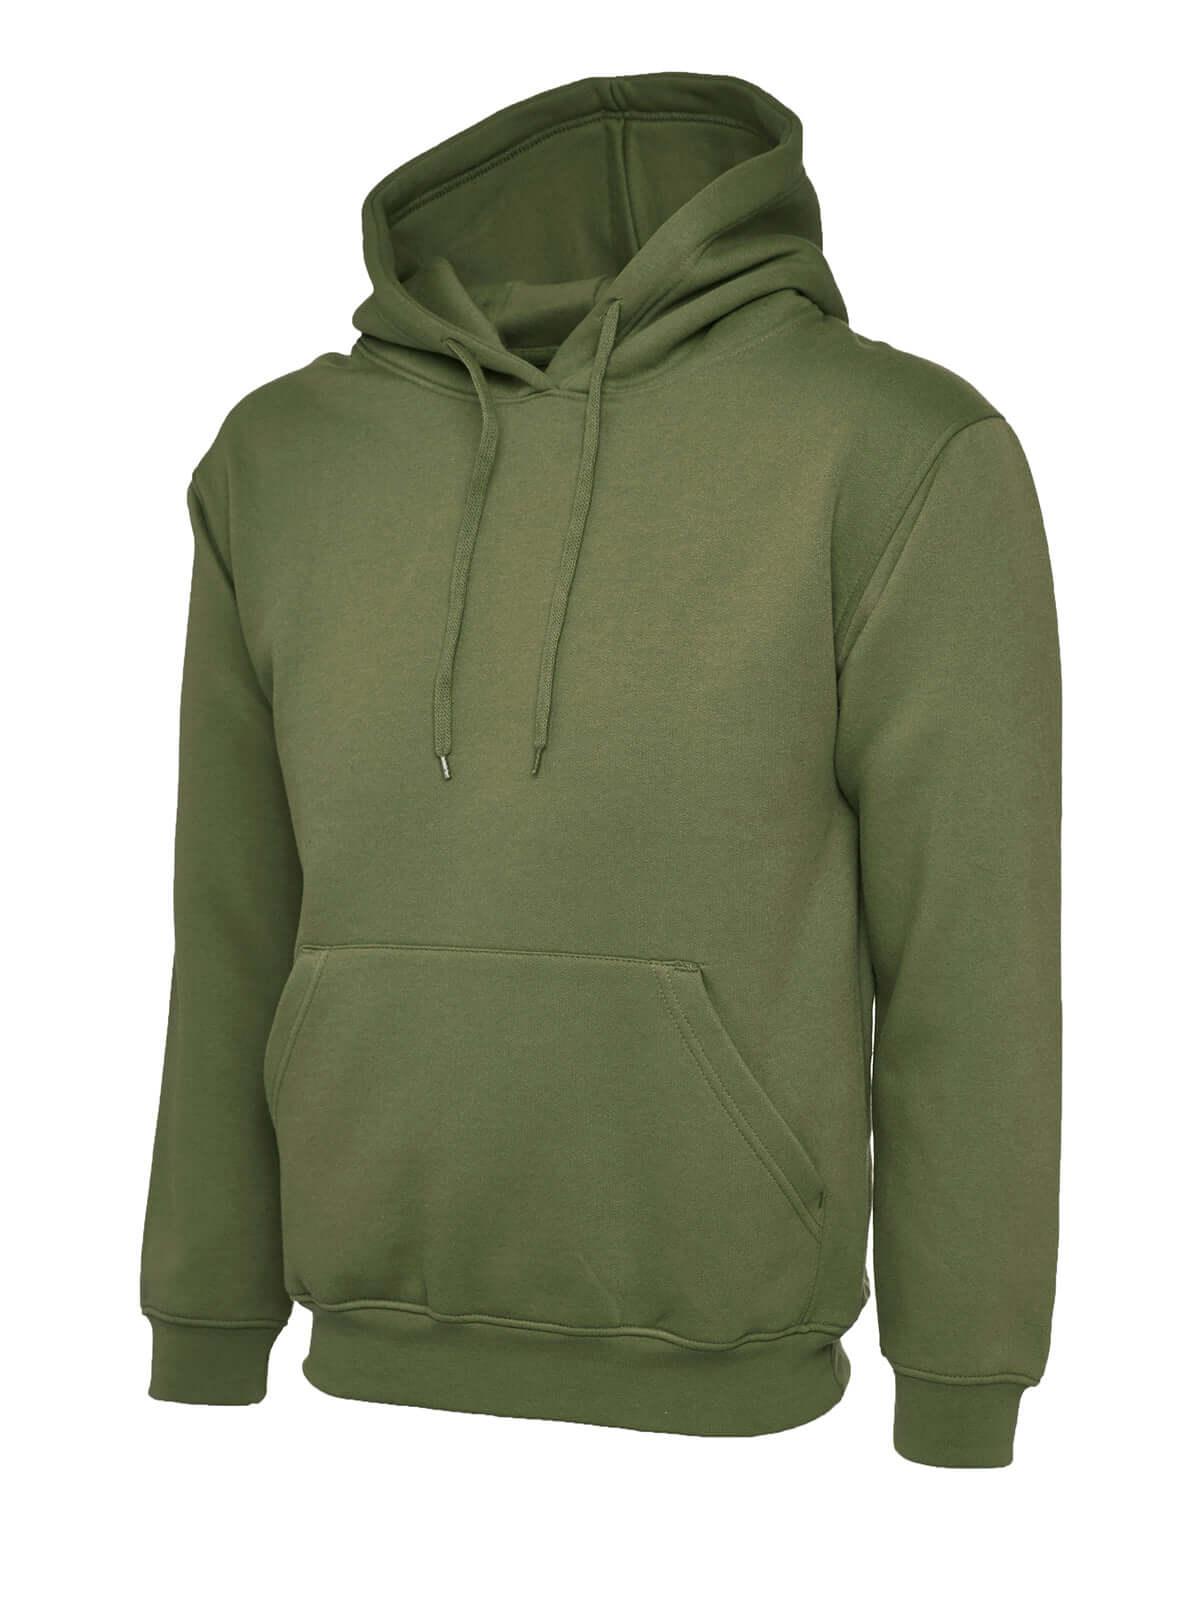 Pegasus Uniform Classic Hooded Sweatshirt - Military Green